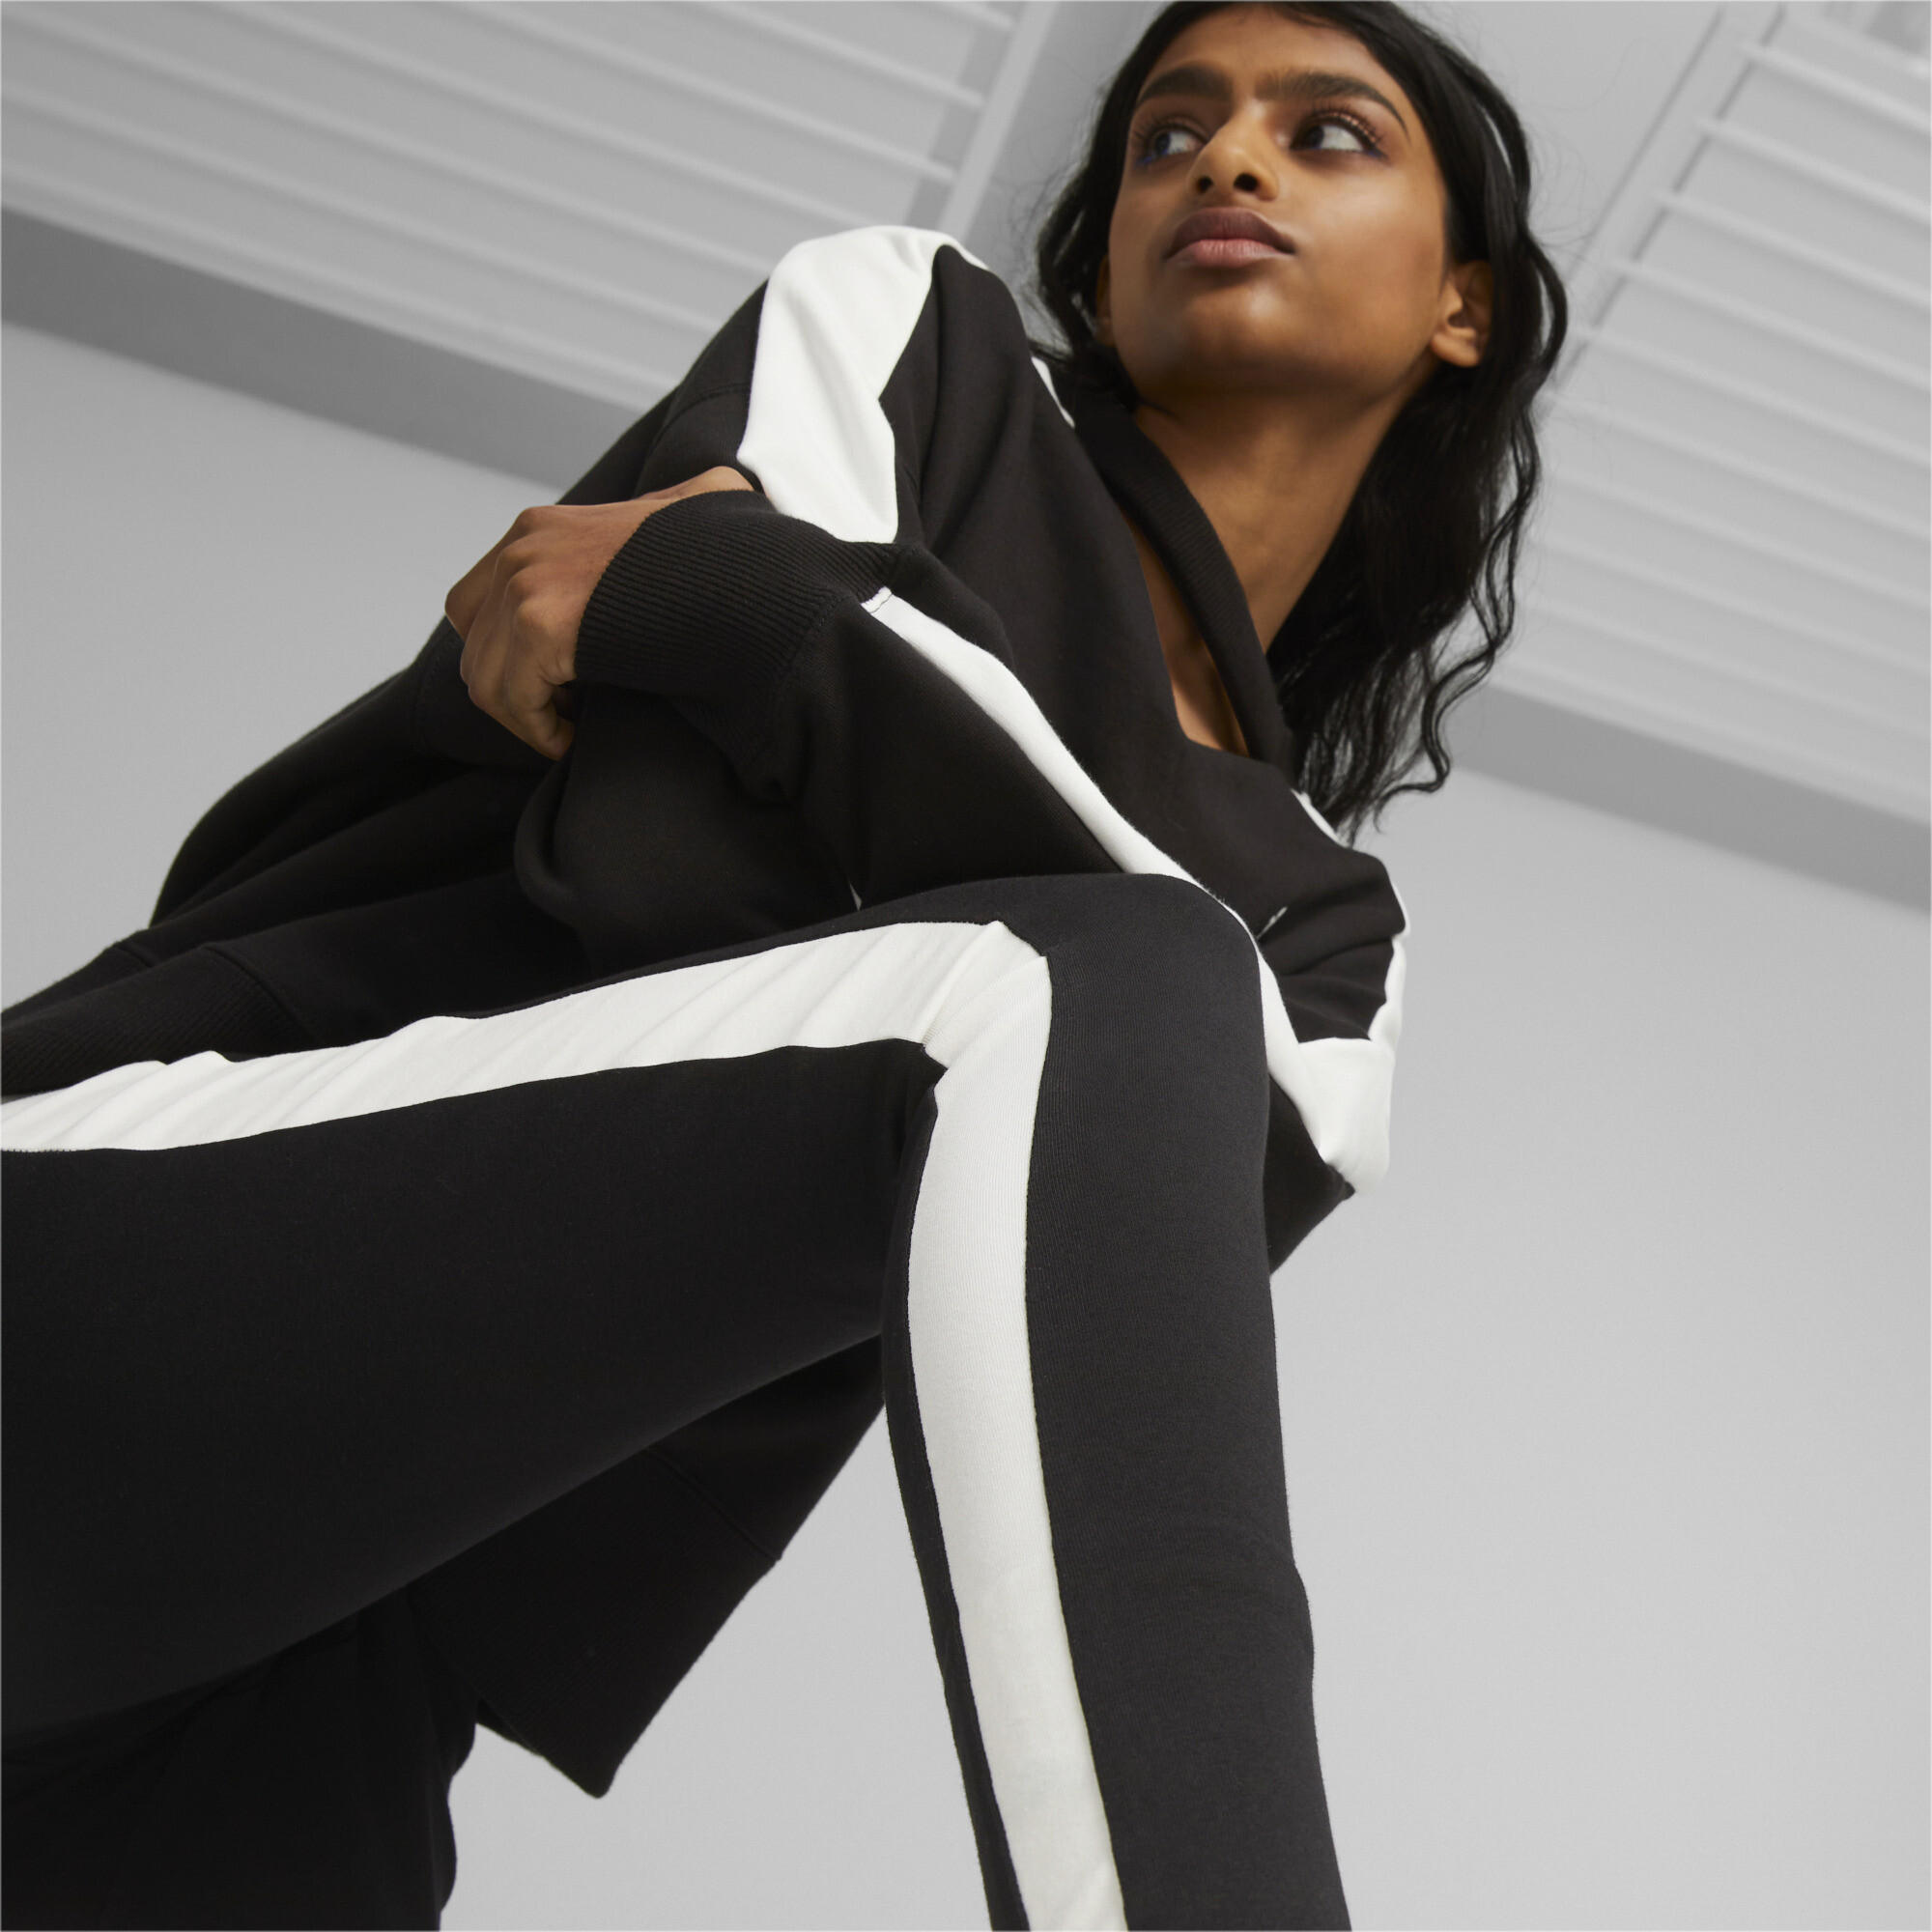 Women's Puma Iconic T7 Mid-Rise's Leggings, Black, Size S, Clothing